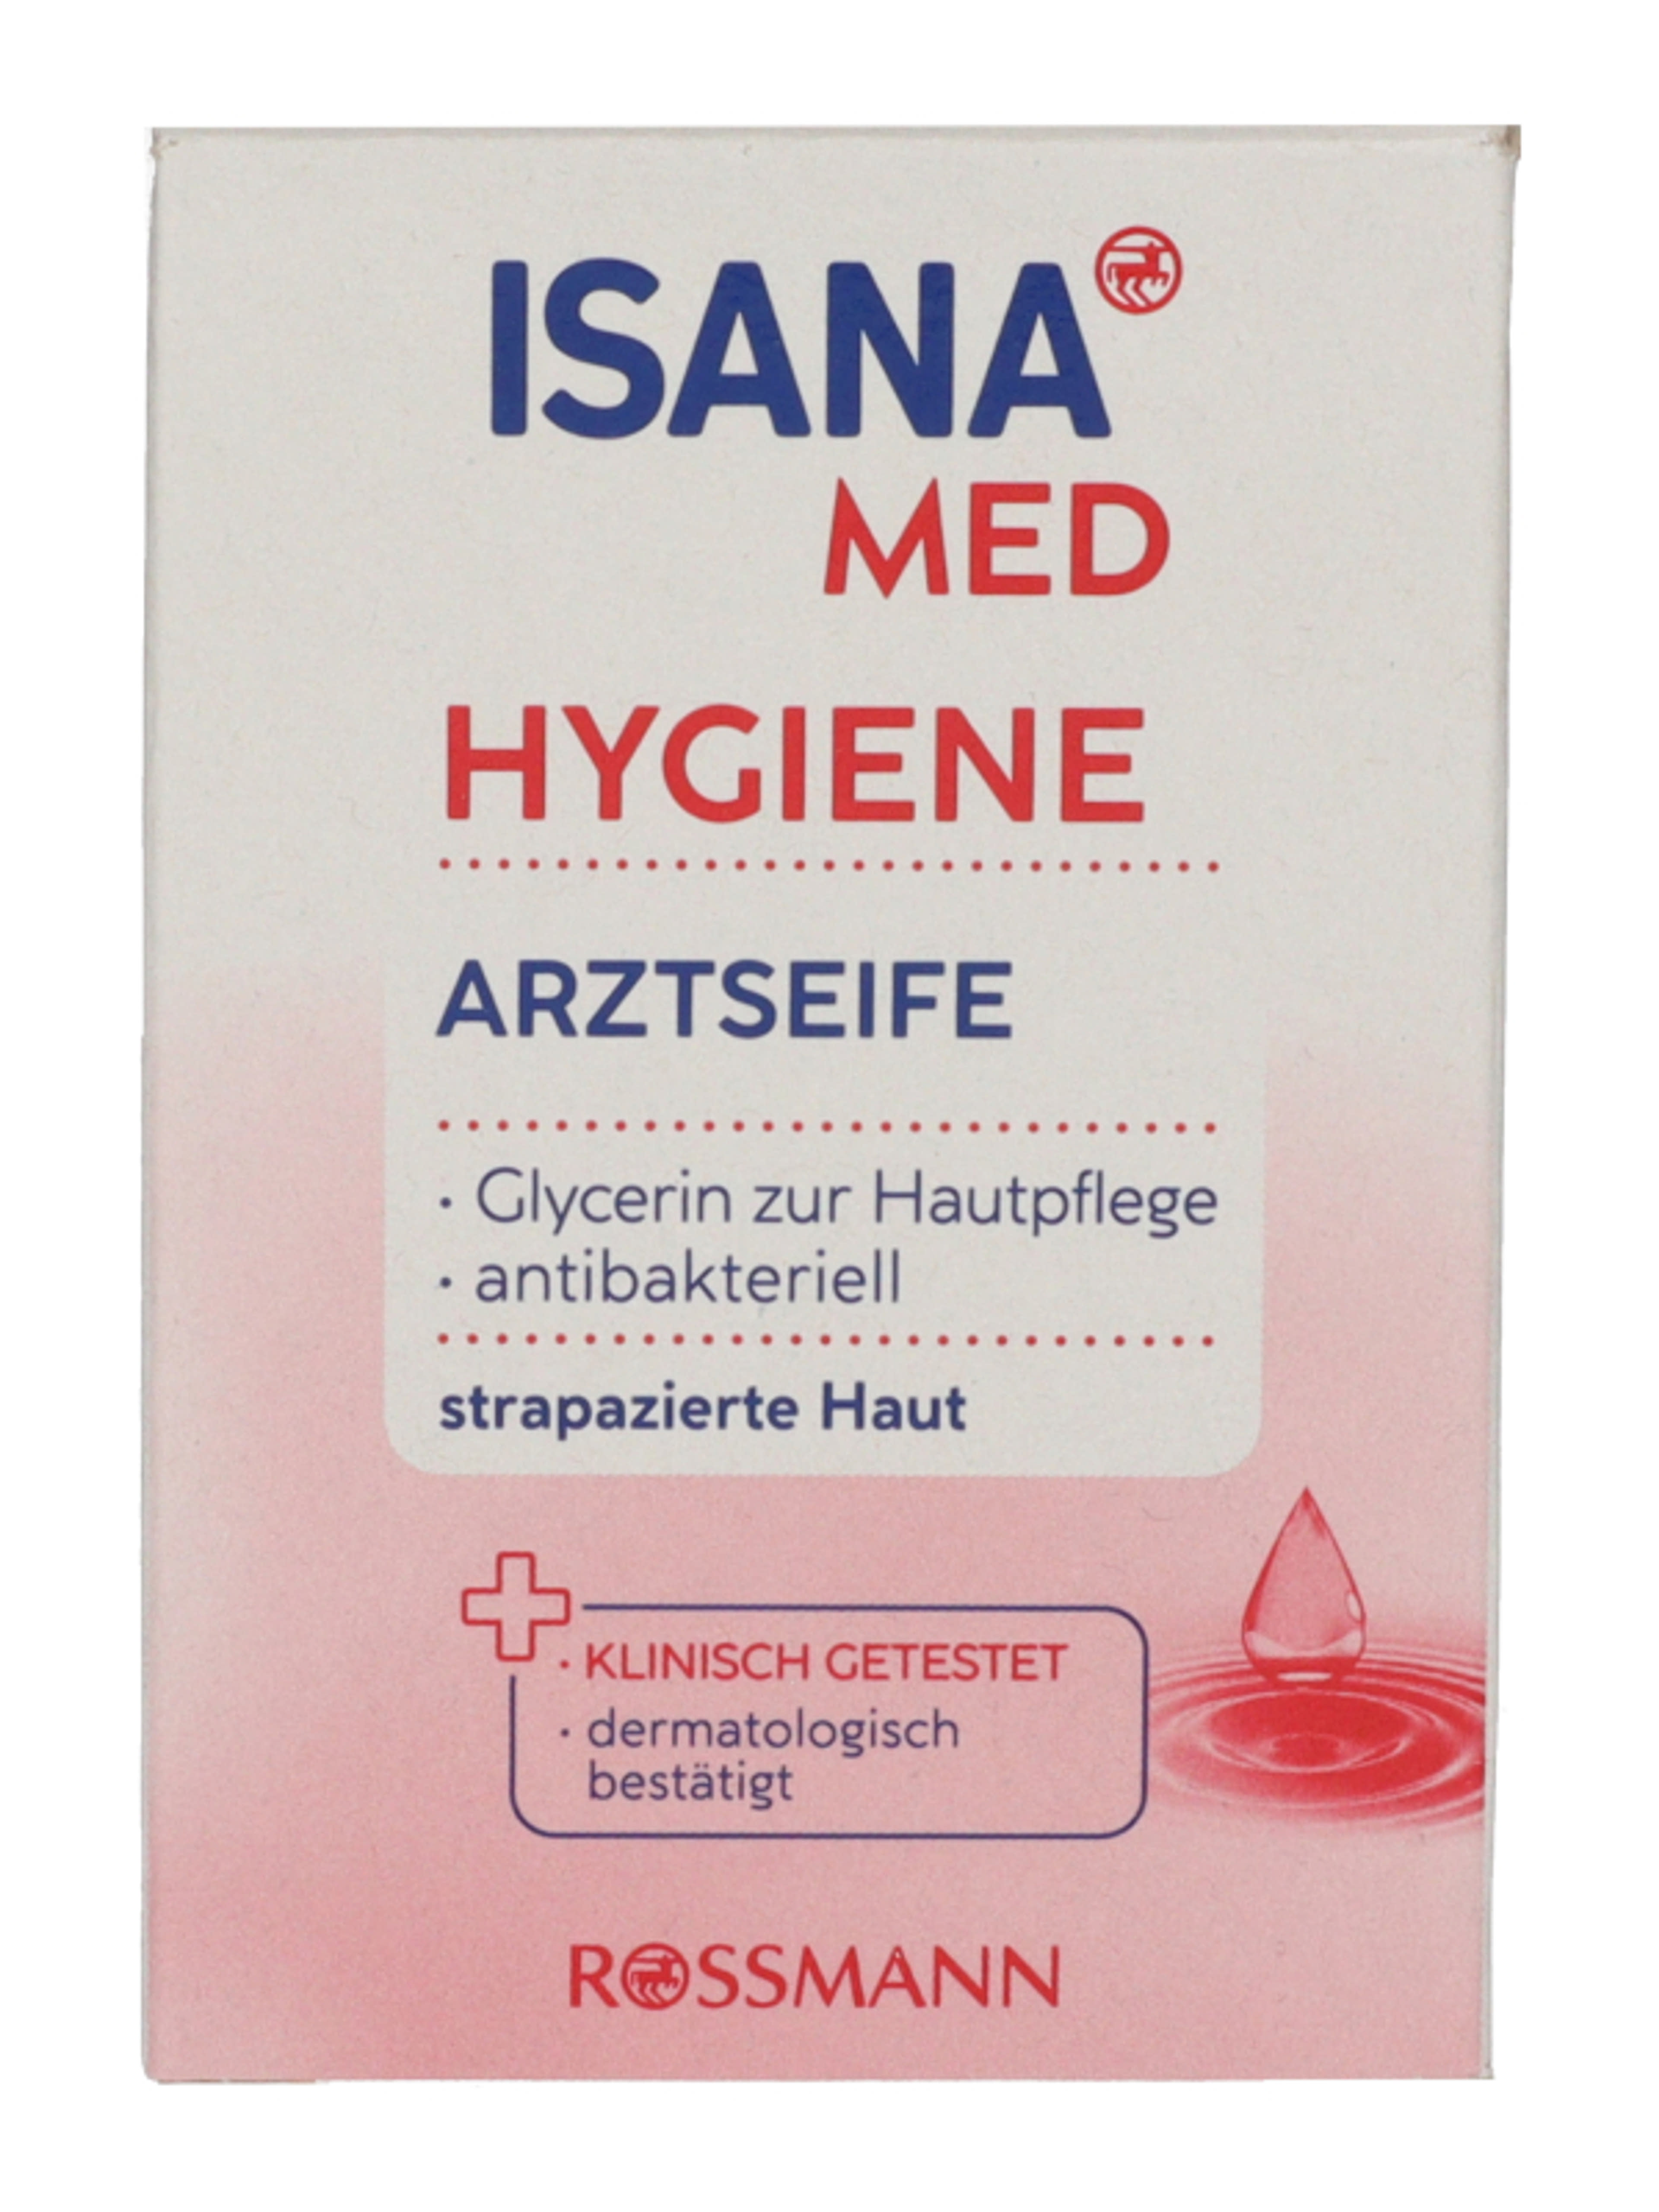 Isana Med Hygiene orvosi szappan - 100 g